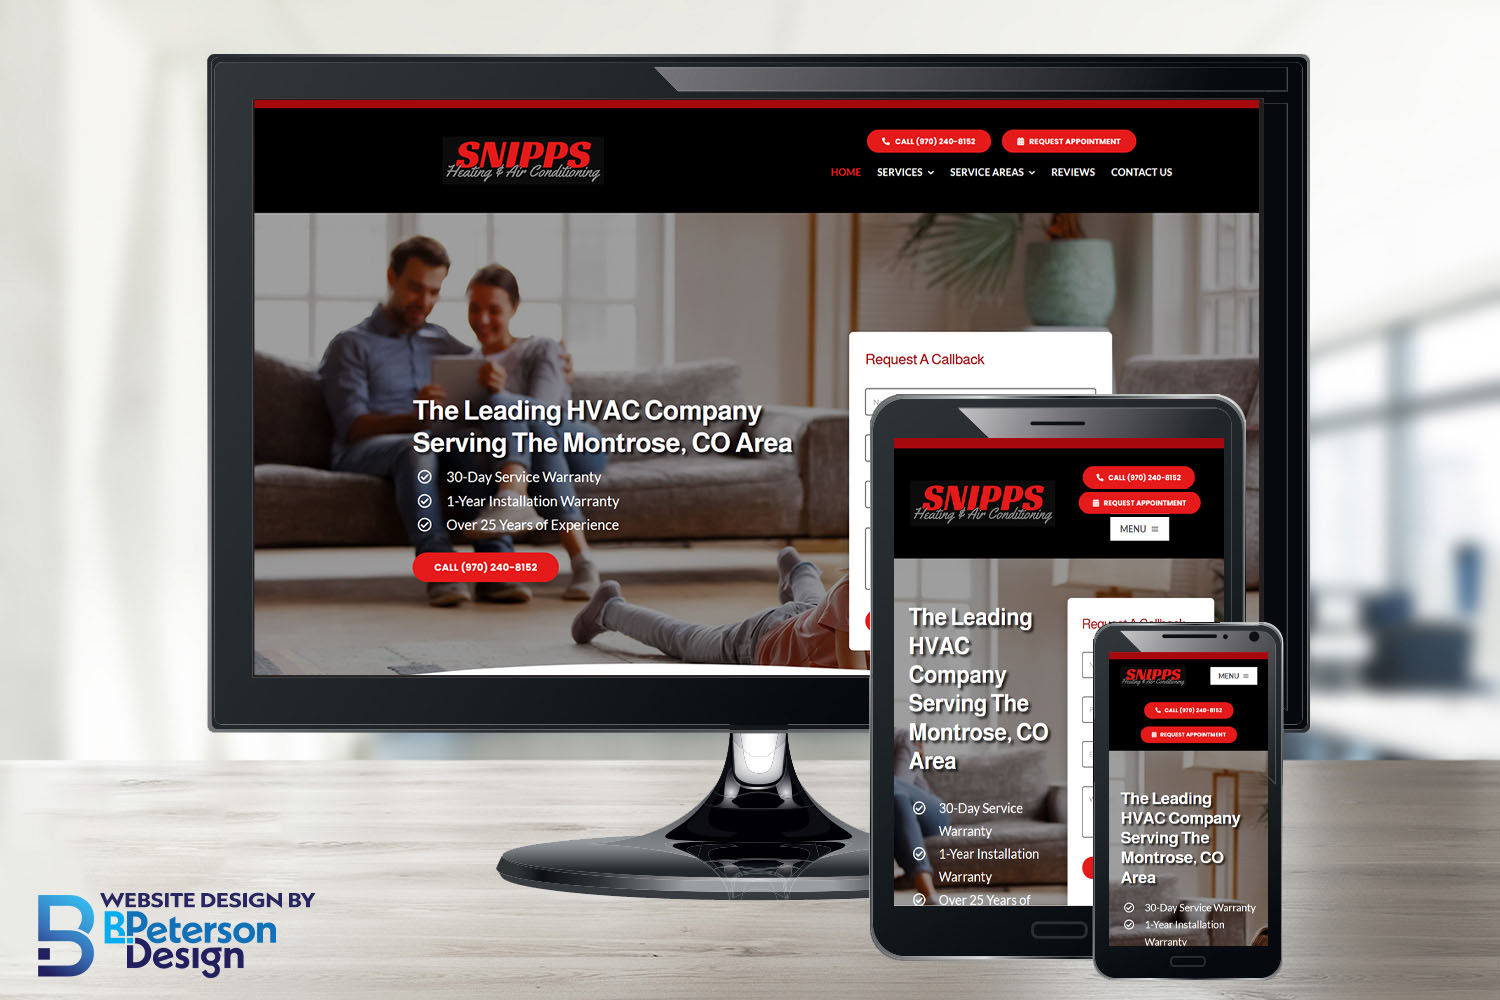 Snipps's website displayed on responsive platforms